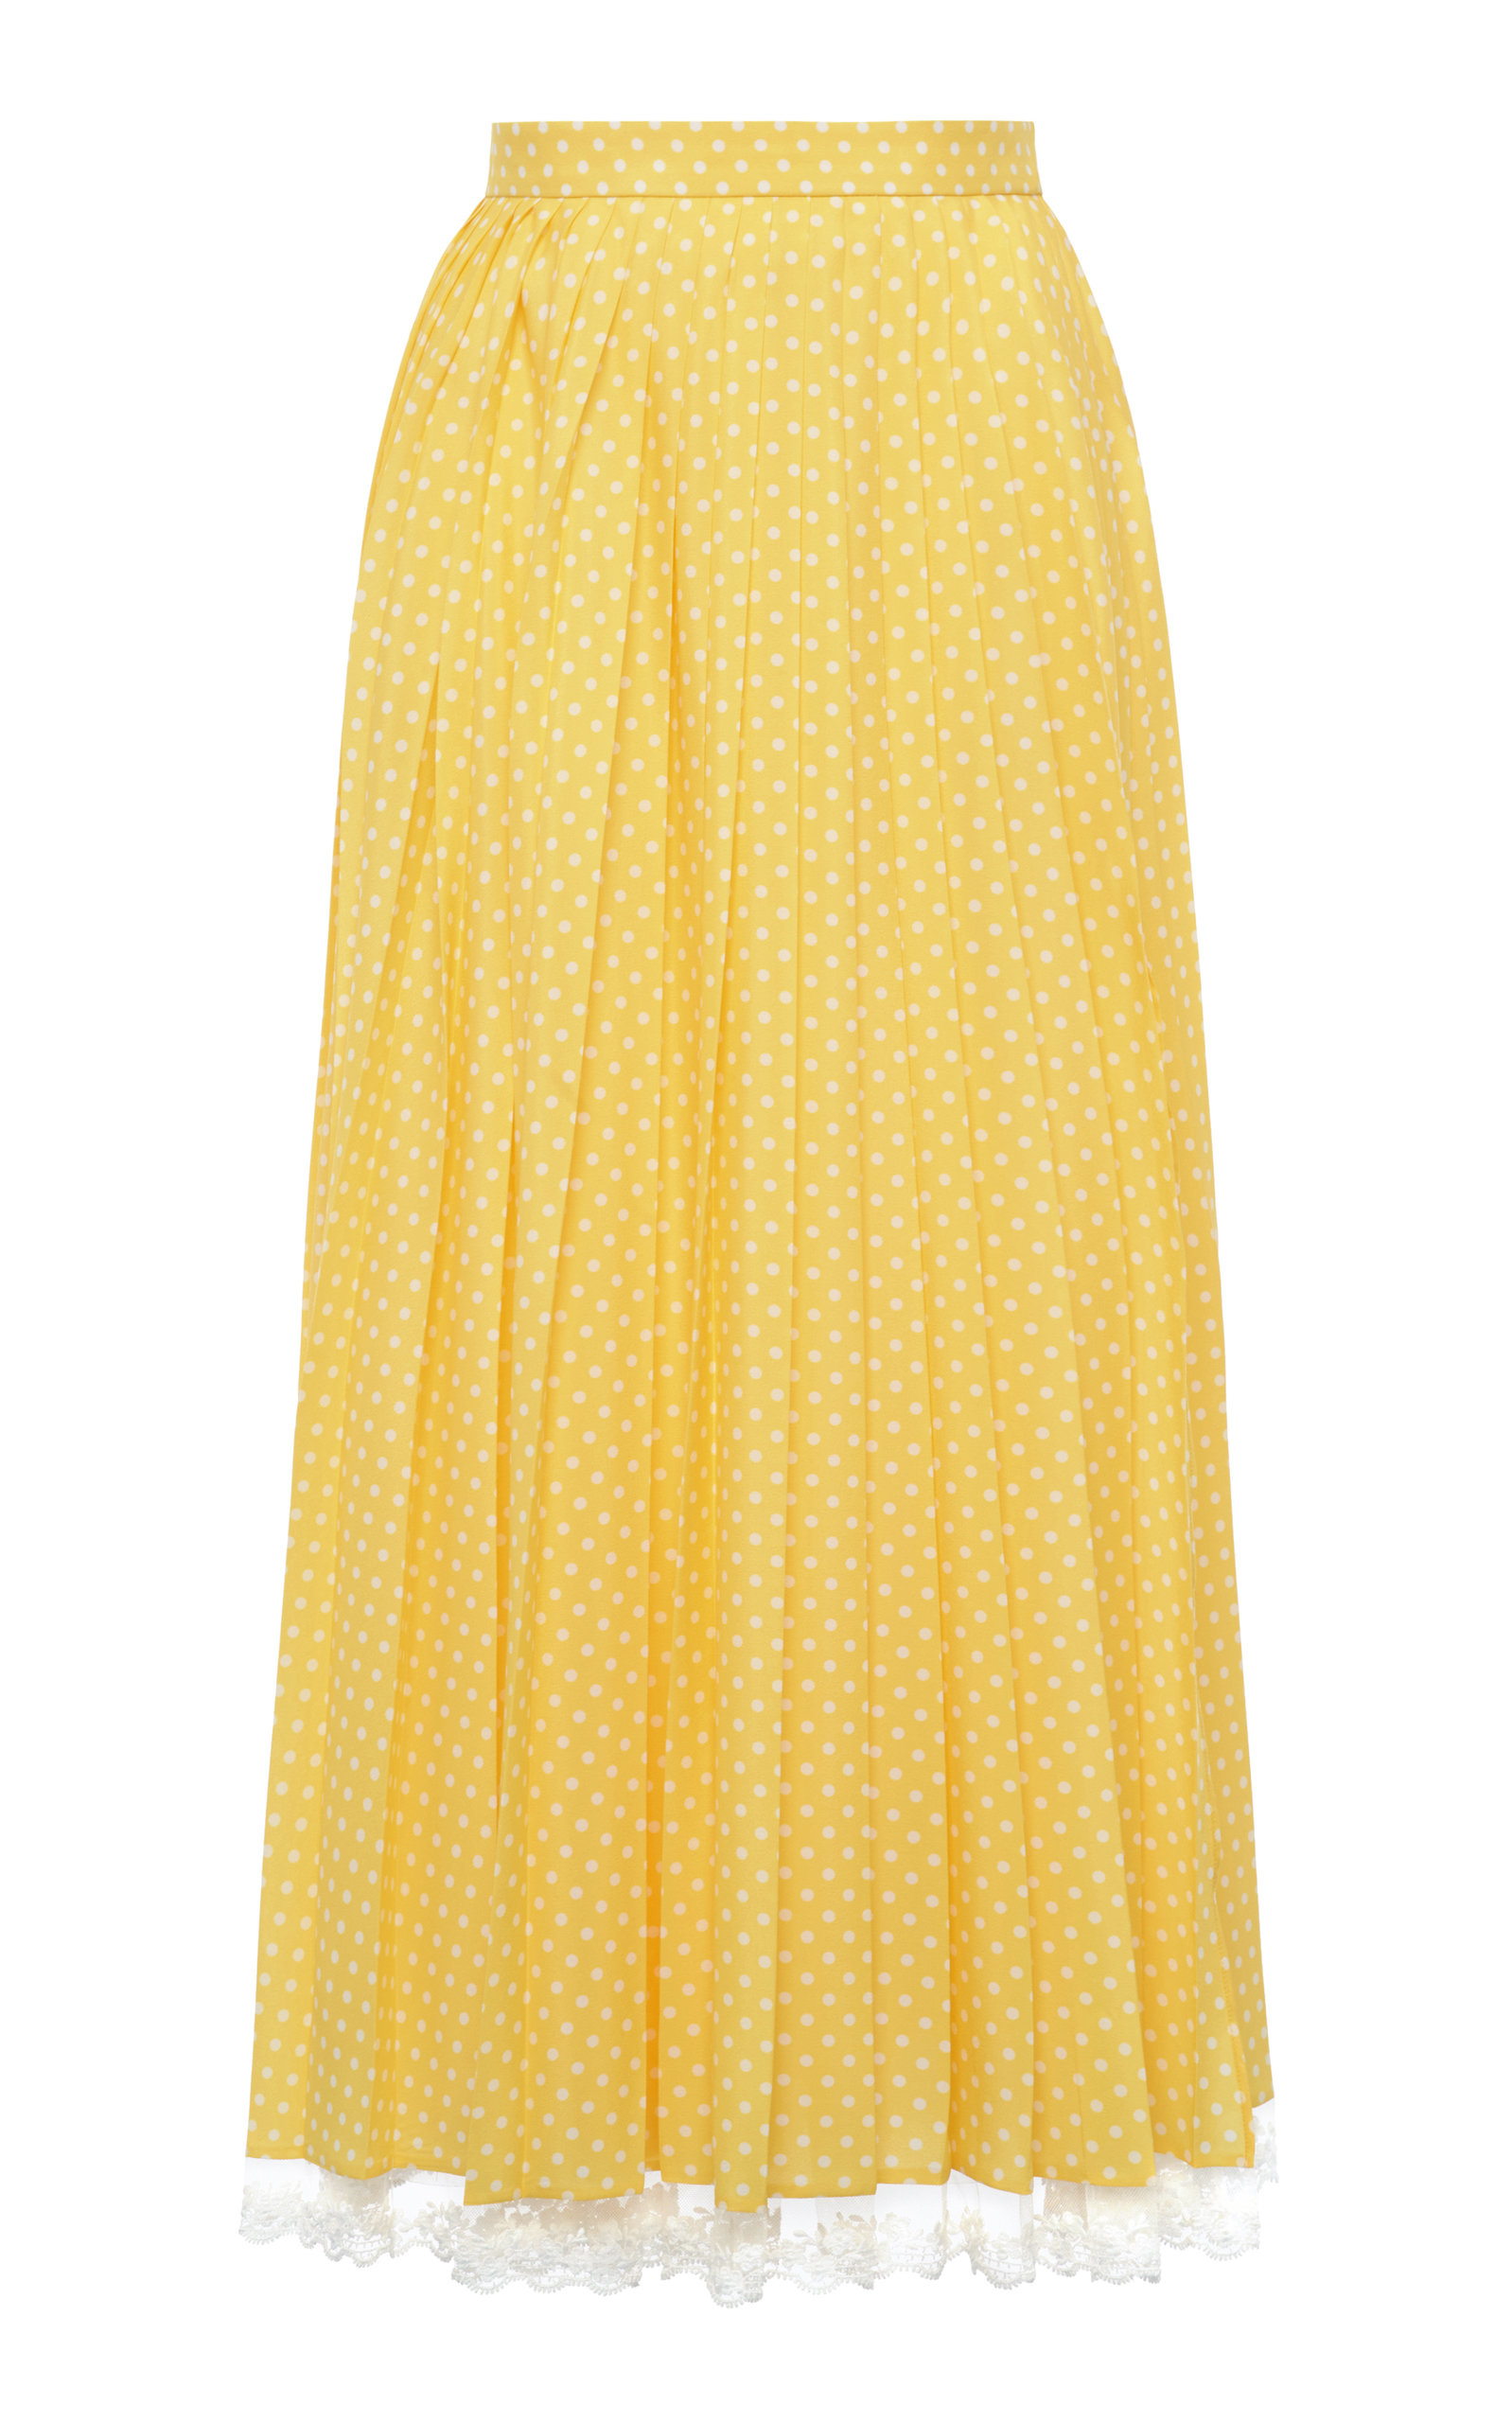 Miu Miu Women's Lace-Trimmed Pleated Polka-Dot Crepe Midi Skirt